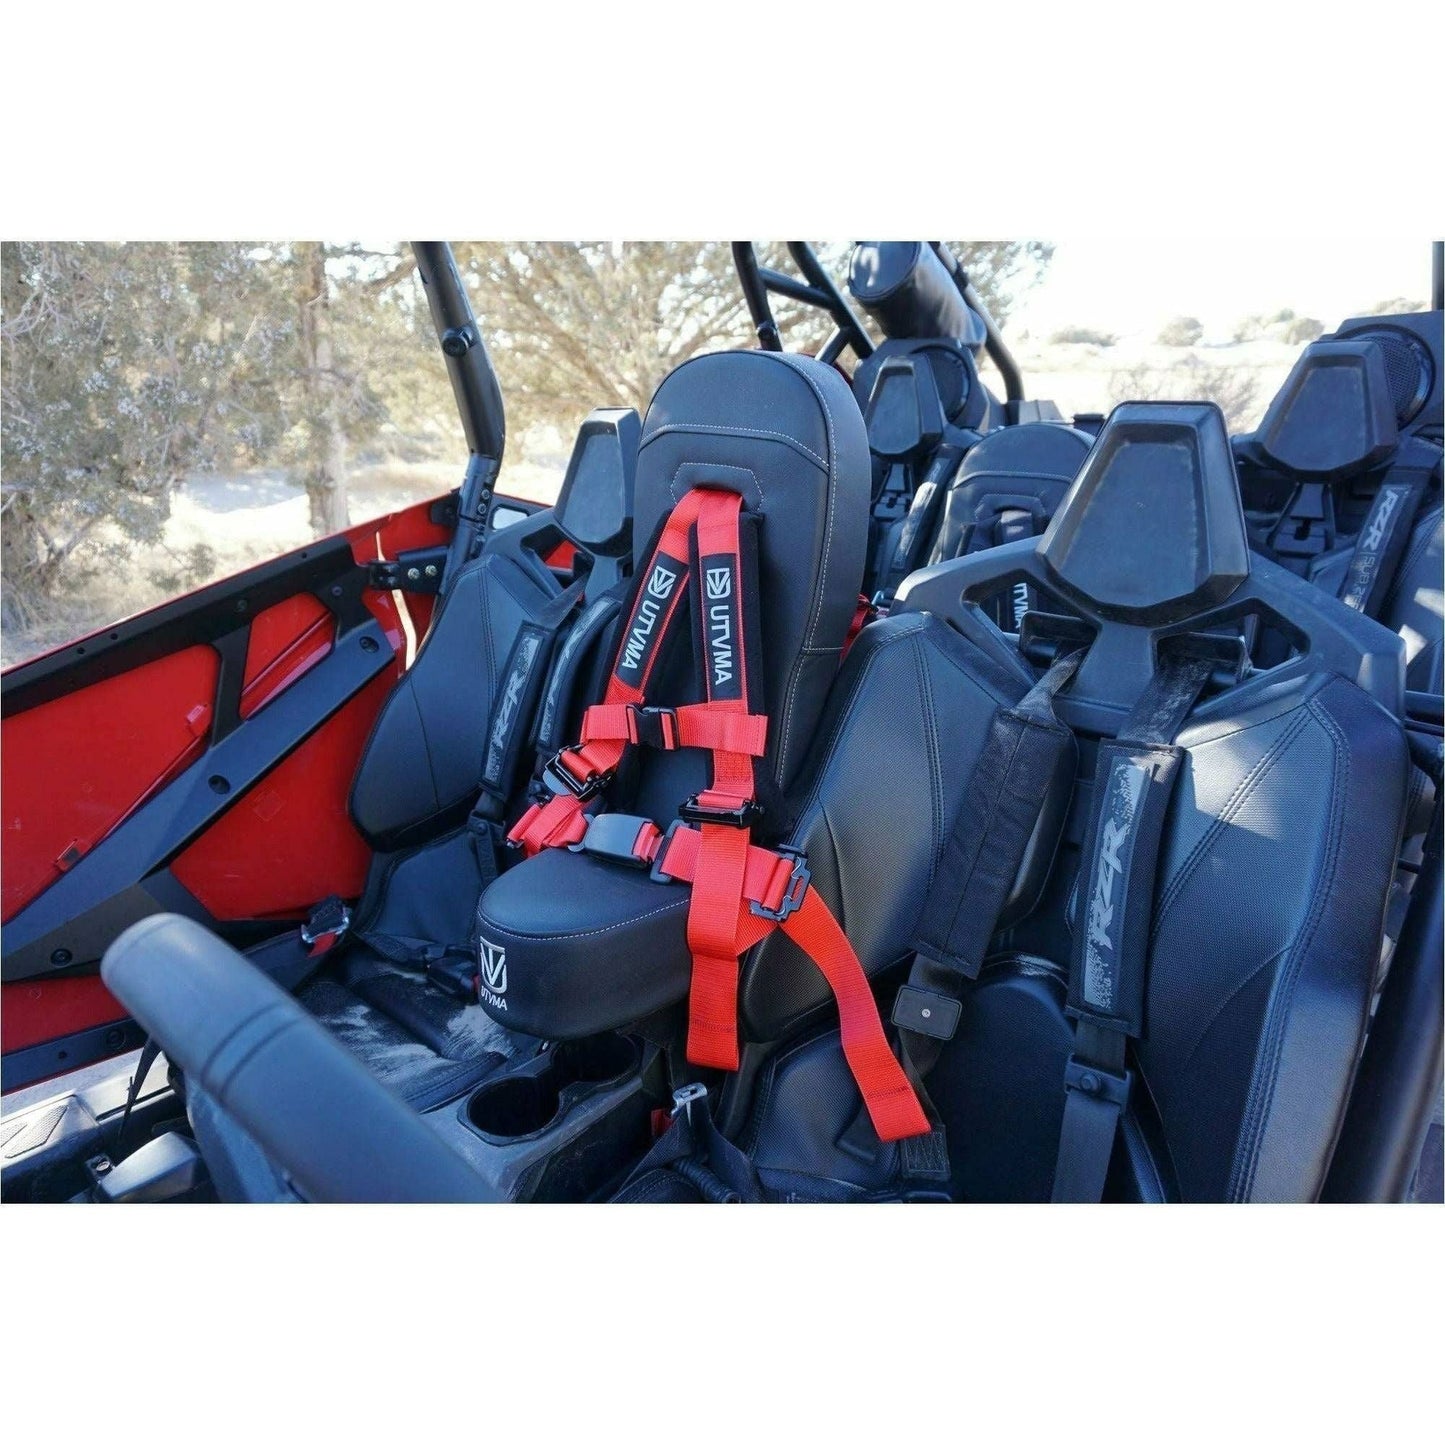 Polaris RZR Pro XP Bump Seat with Harness (GARAGE SALE)